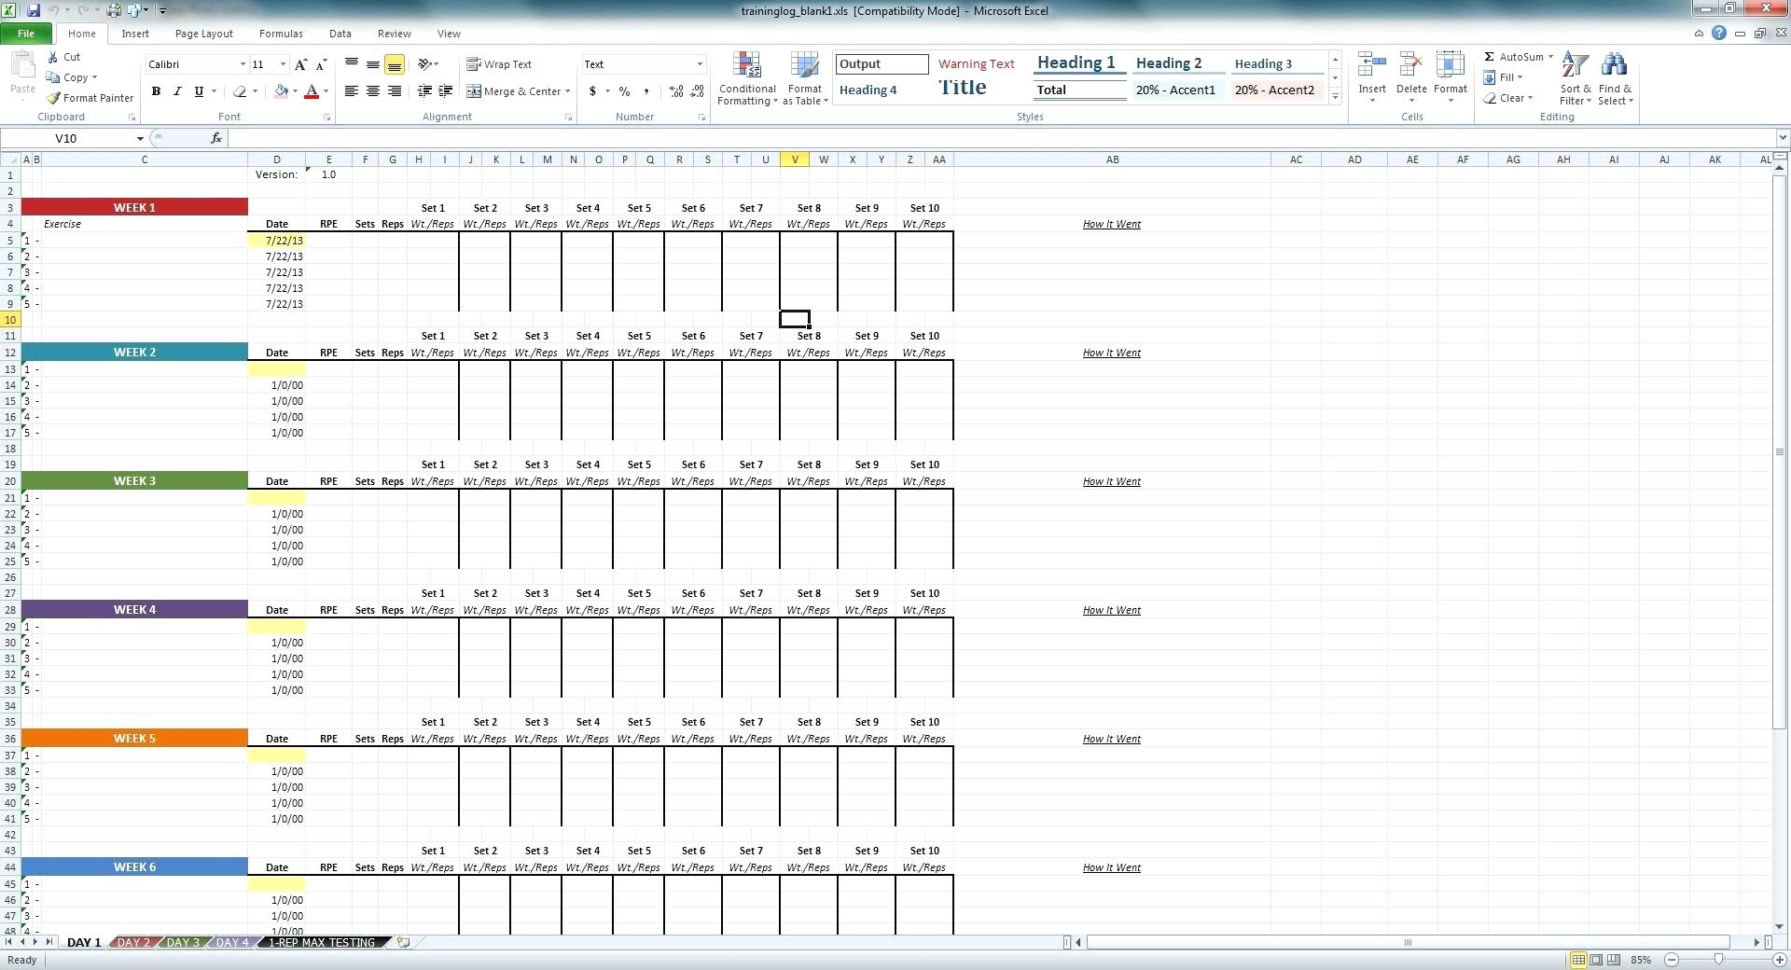 Employee Pto Tracking Excel Spreadsheet Spreadsheet Downloa Employee